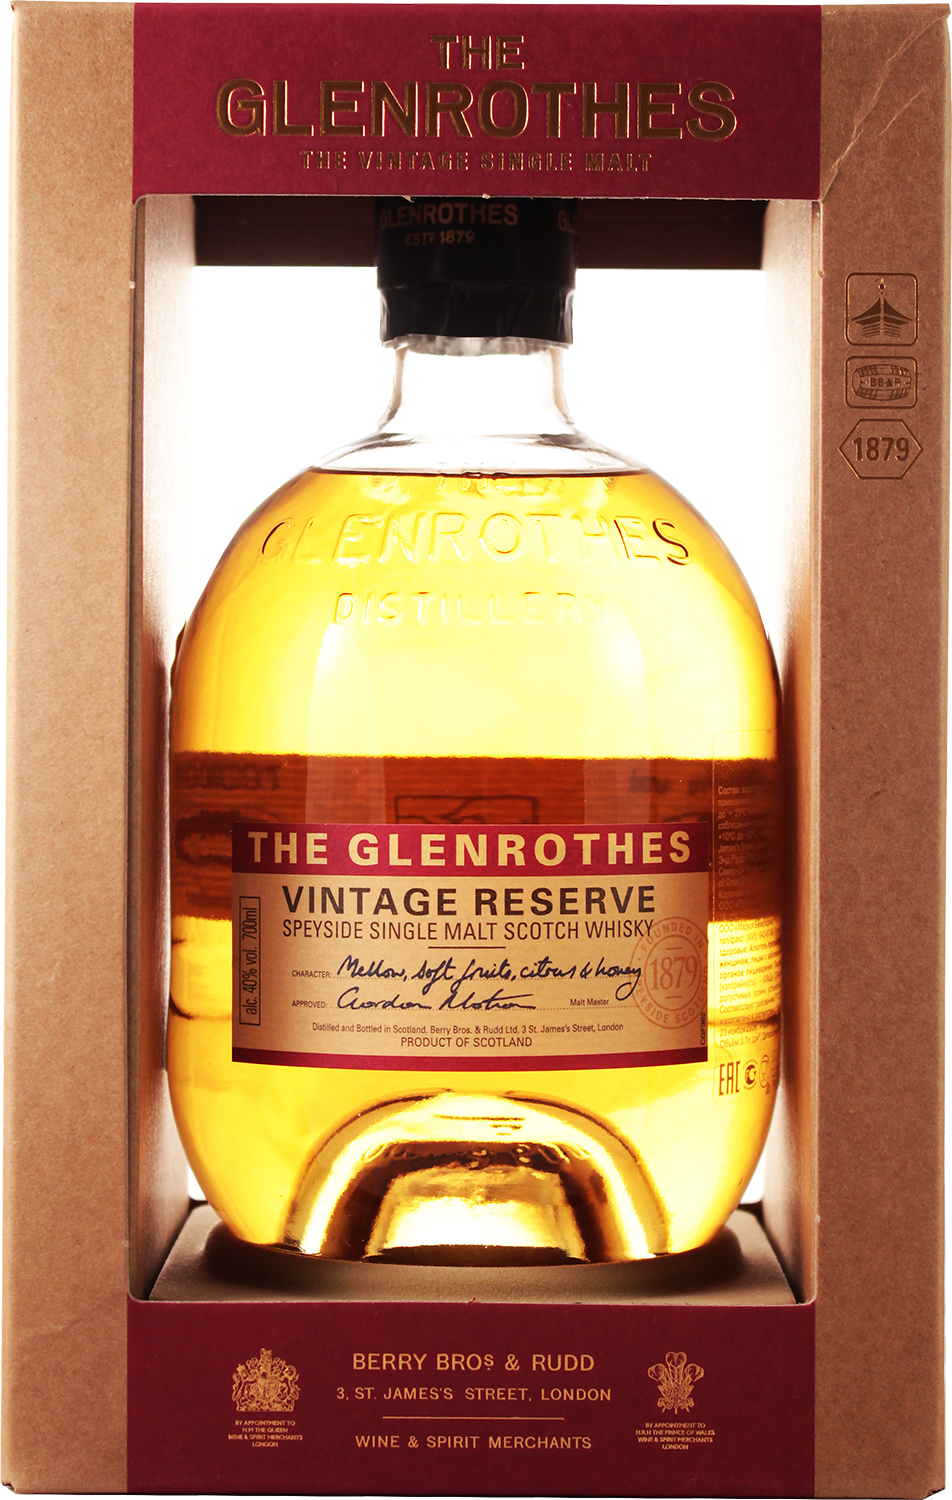 The Glenrothes Vintage Reserve Speyside Single Malt Scotch Whisky (gift box)